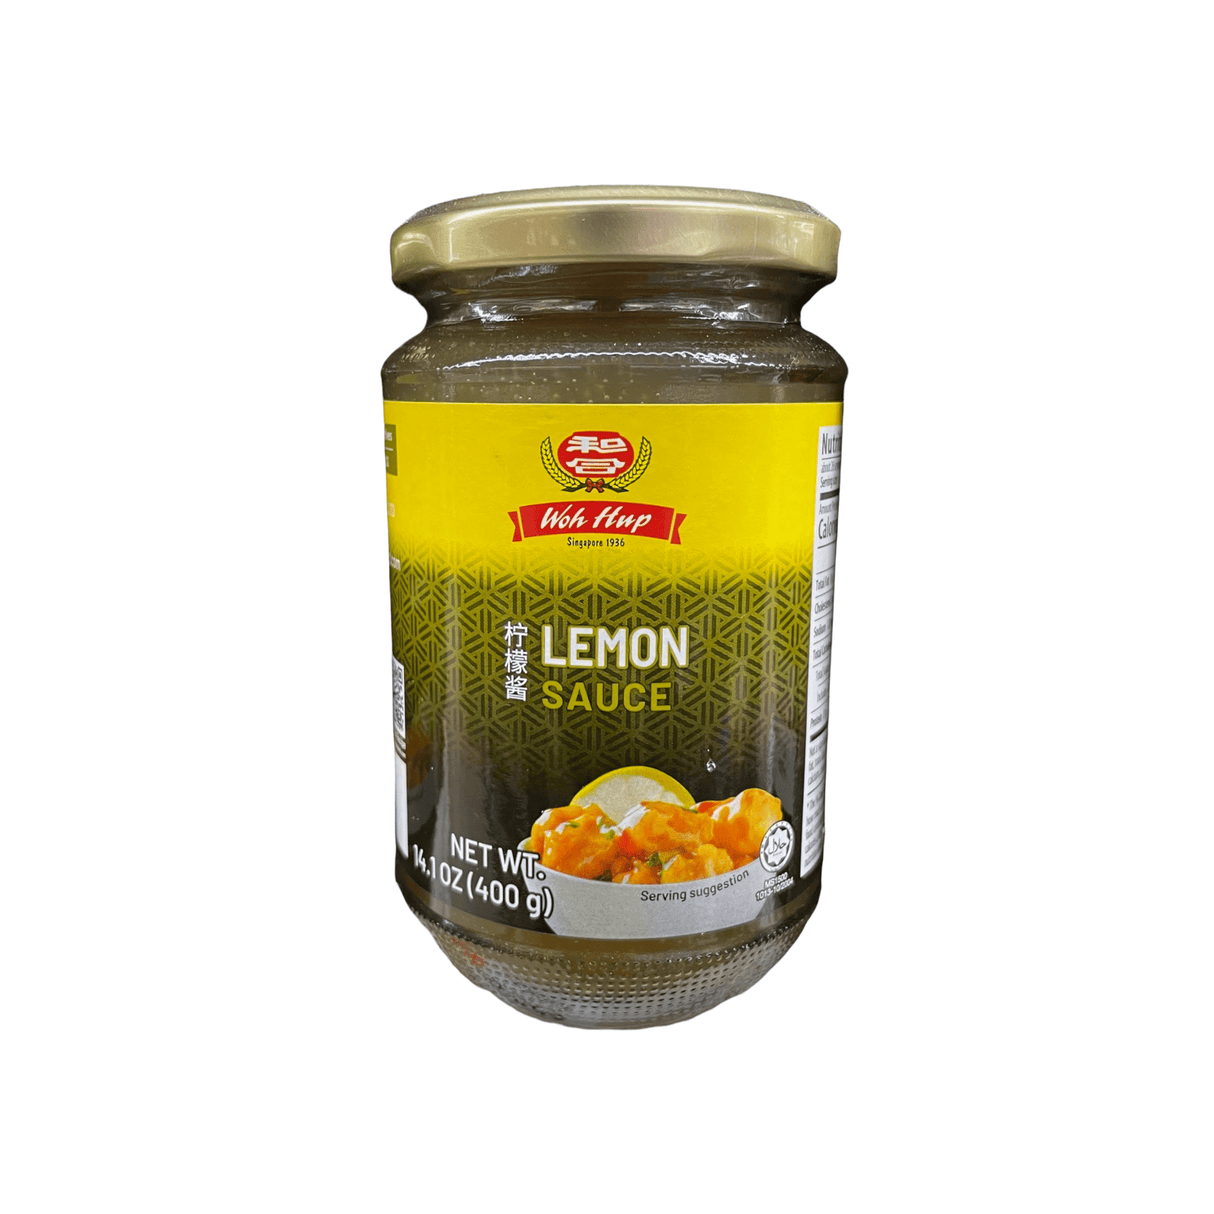 Woh Lemon Sauce